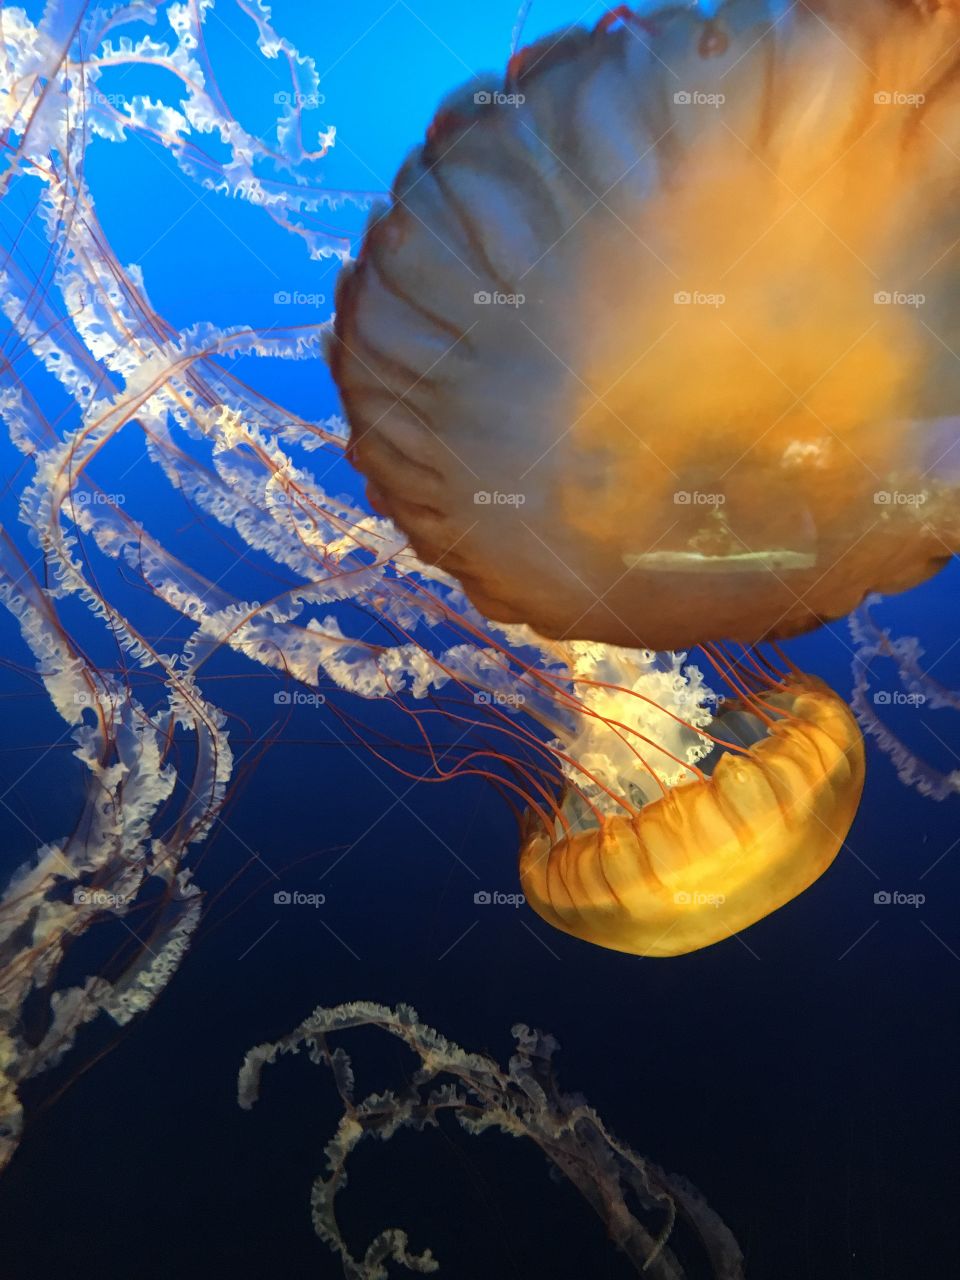 Jellyfish frenzy